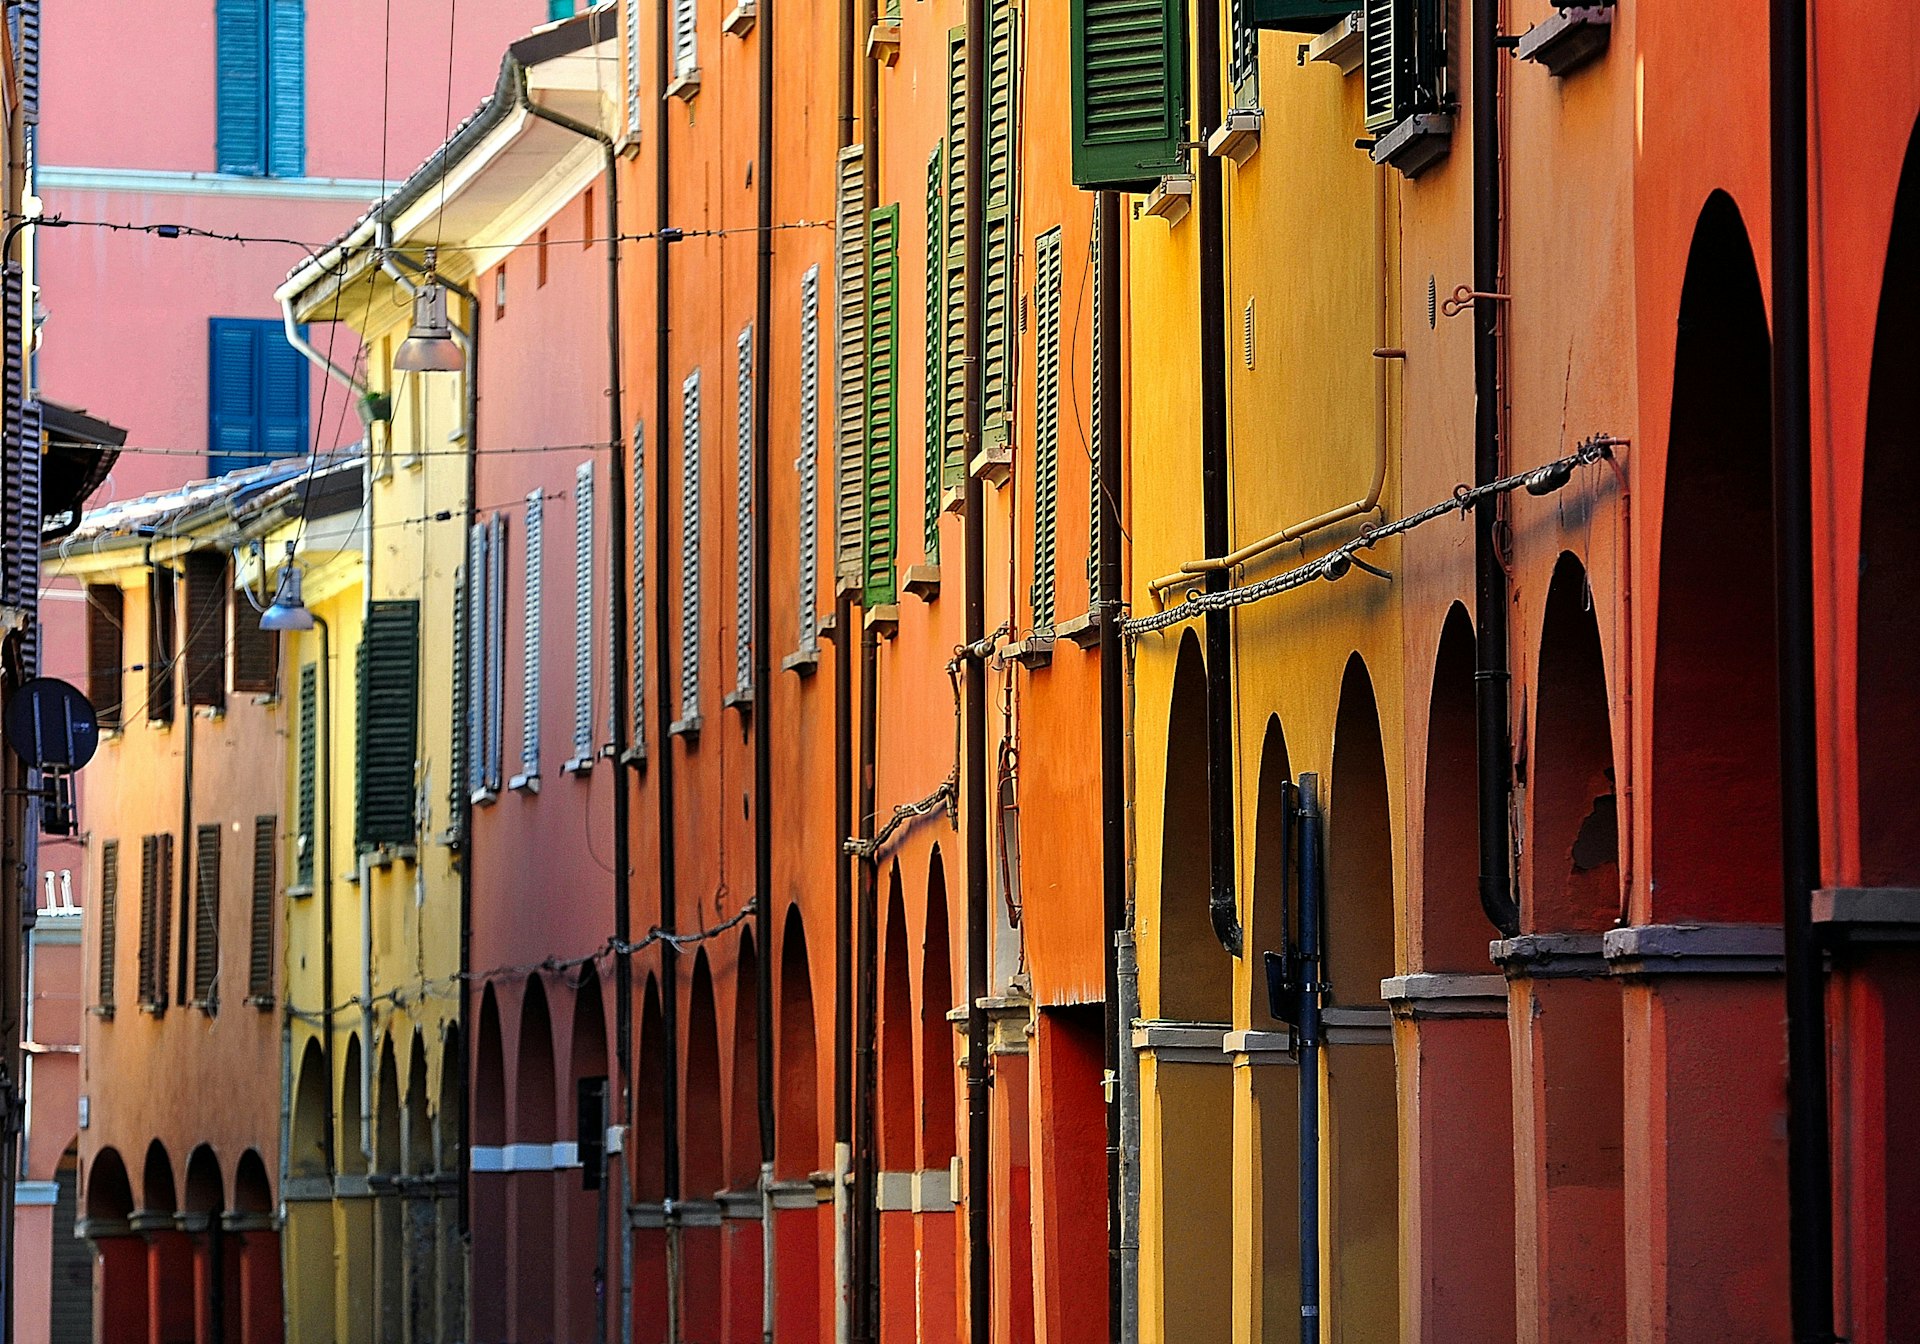 The porticoes of Bologna, Italy